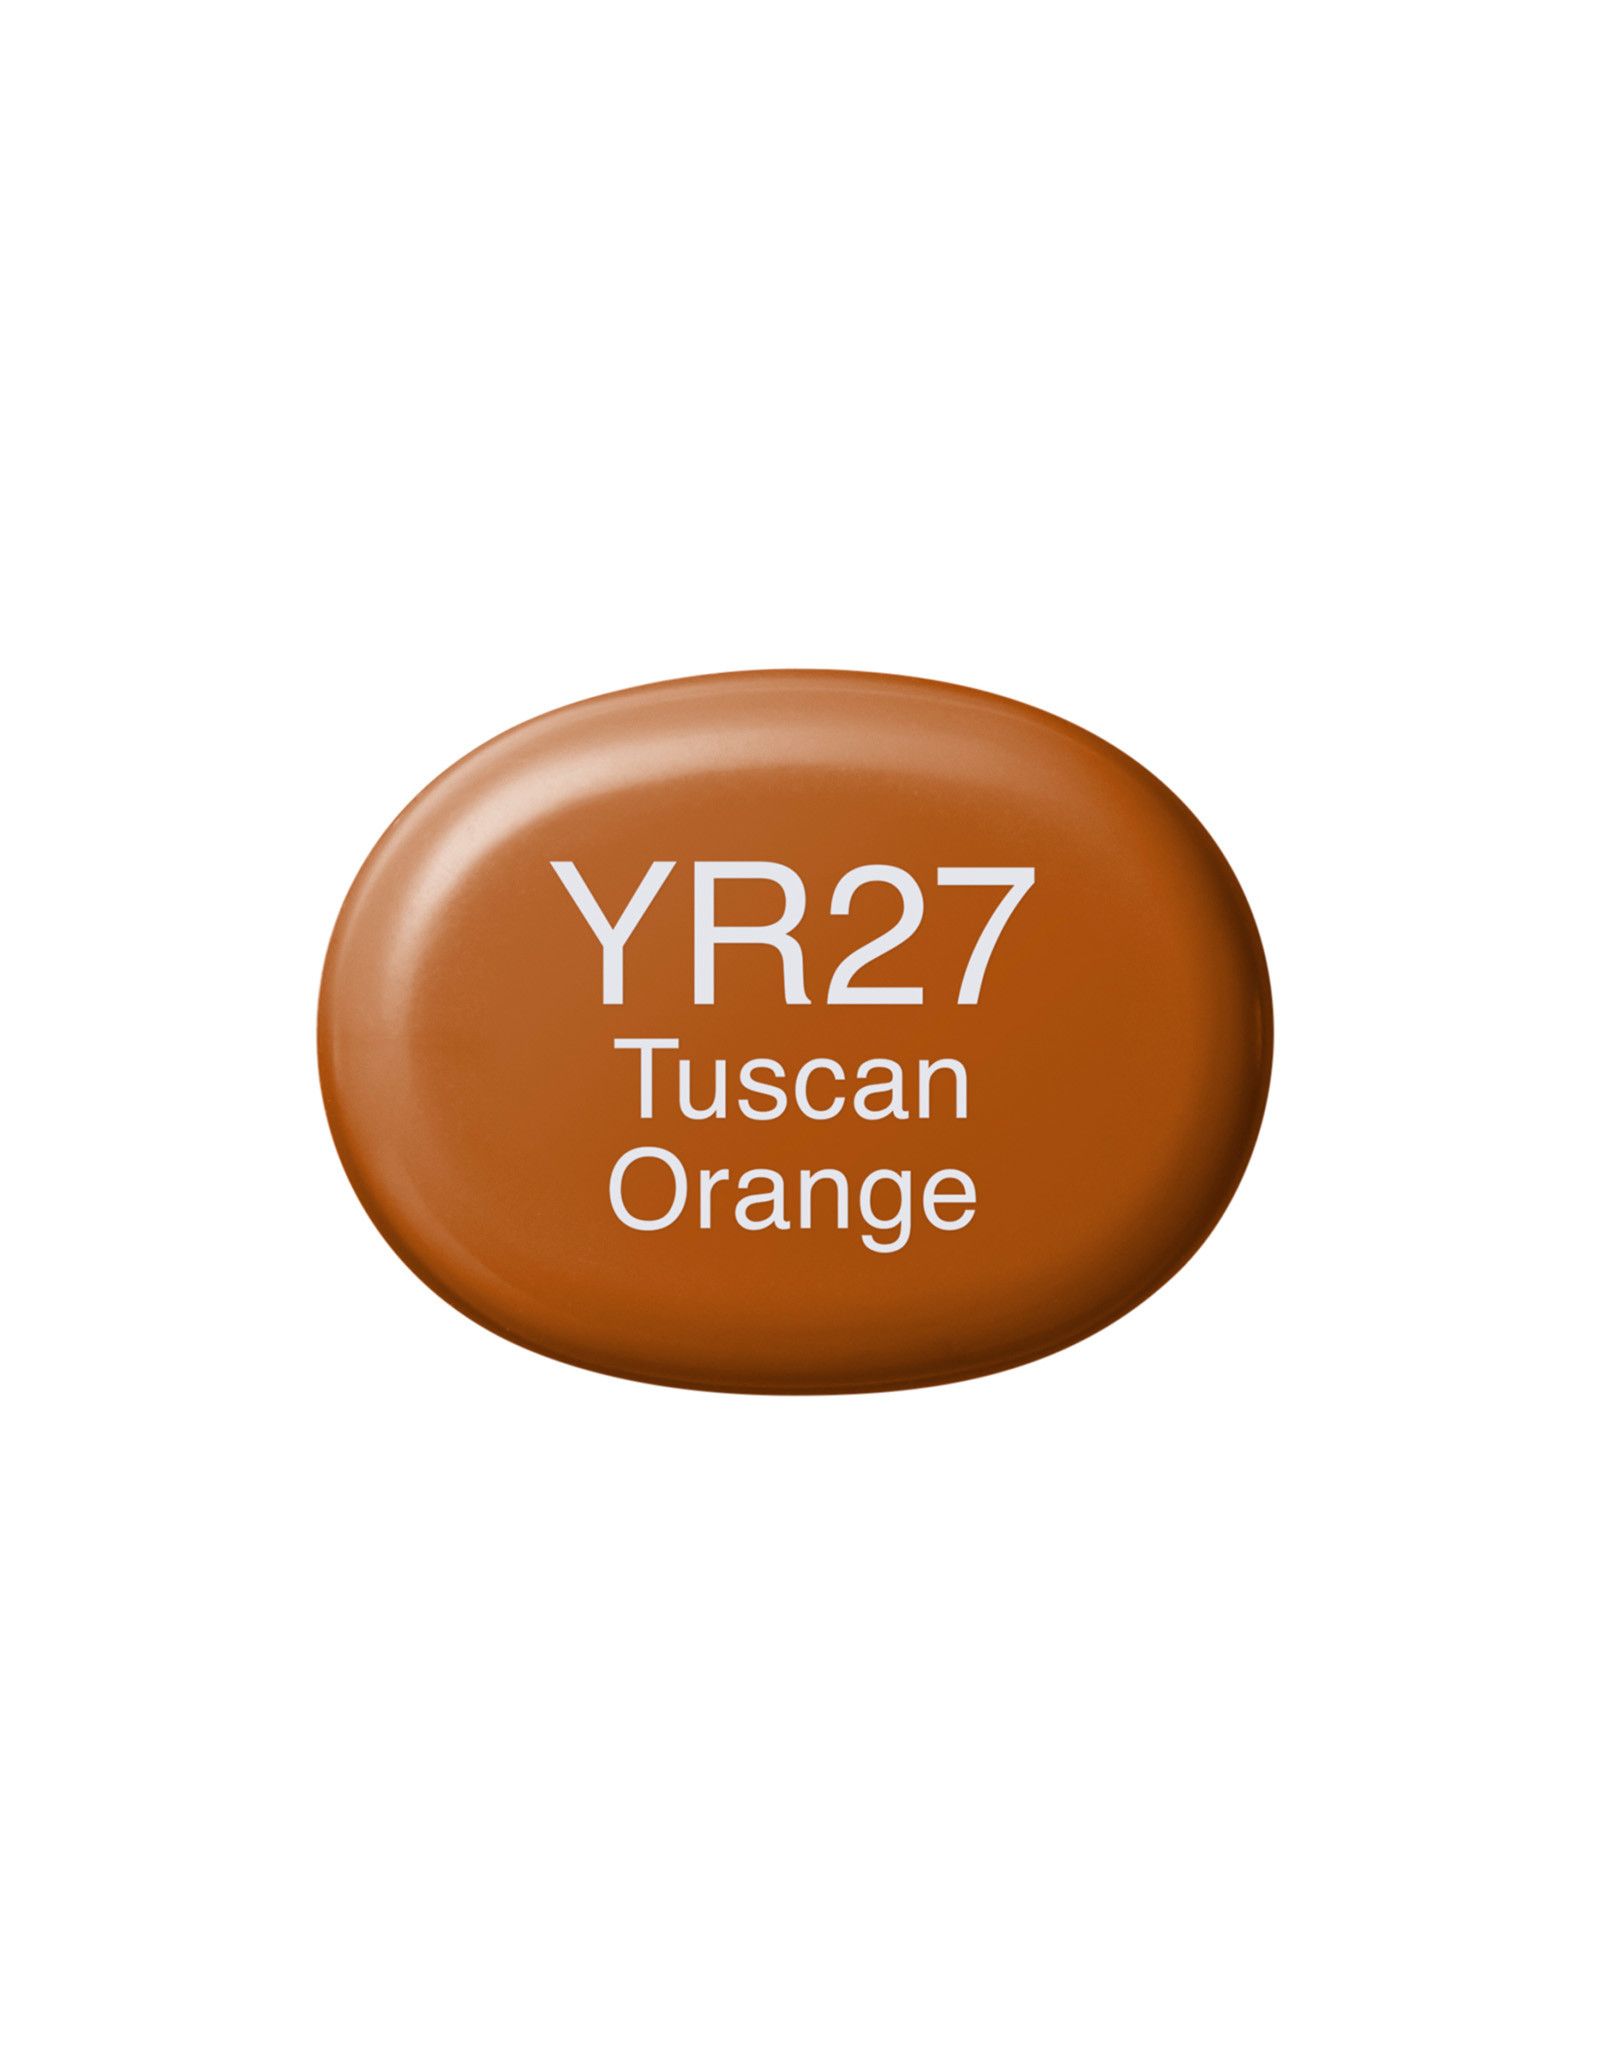 COPIC COPIC Sketch Marker YR27 Tuscan Orange